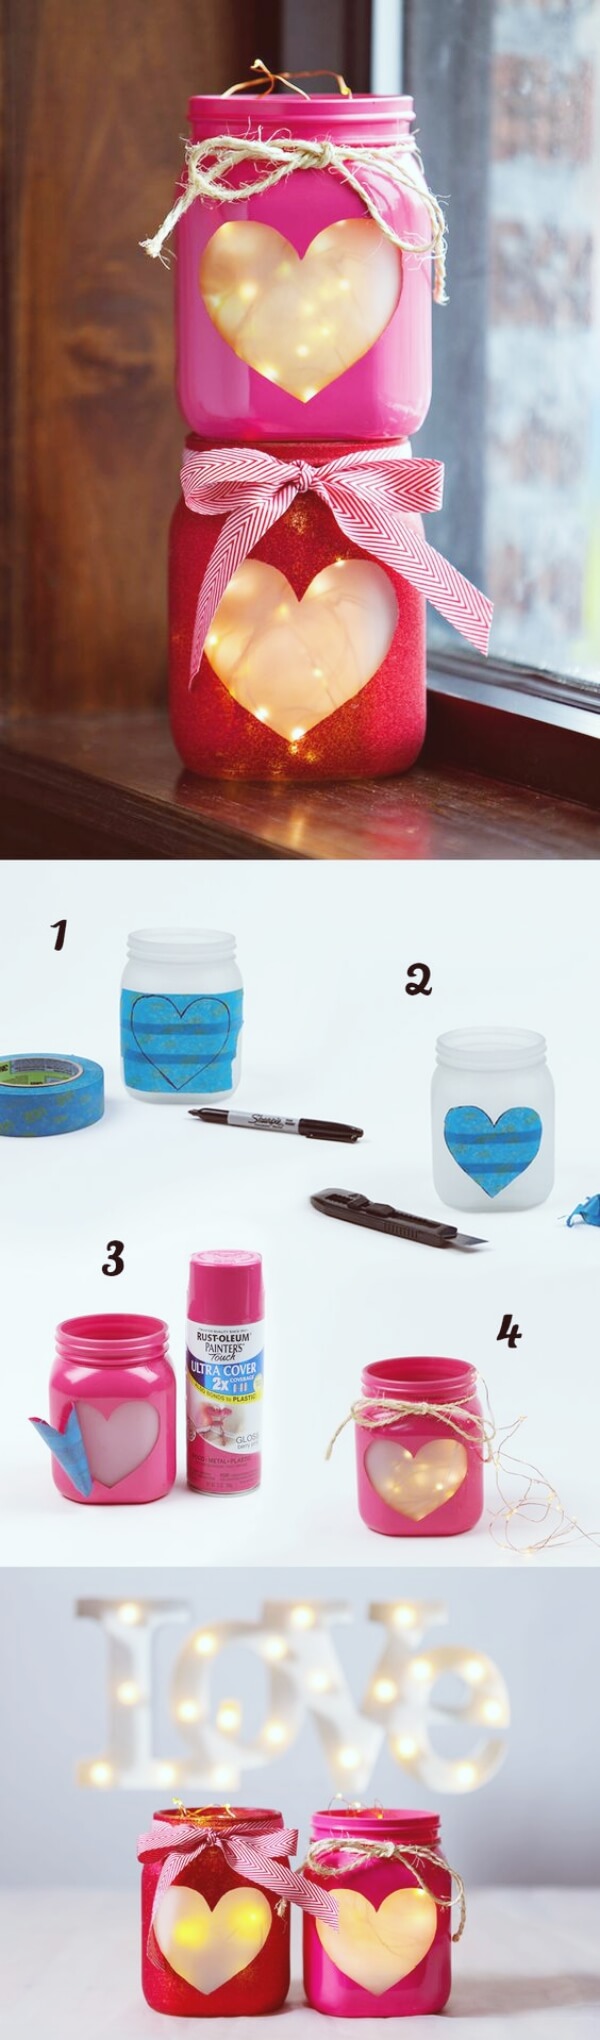 Mason Jar Hearty Lantern | Creative DIY Garden Lantern Ideas - FarmFoodFamily.com